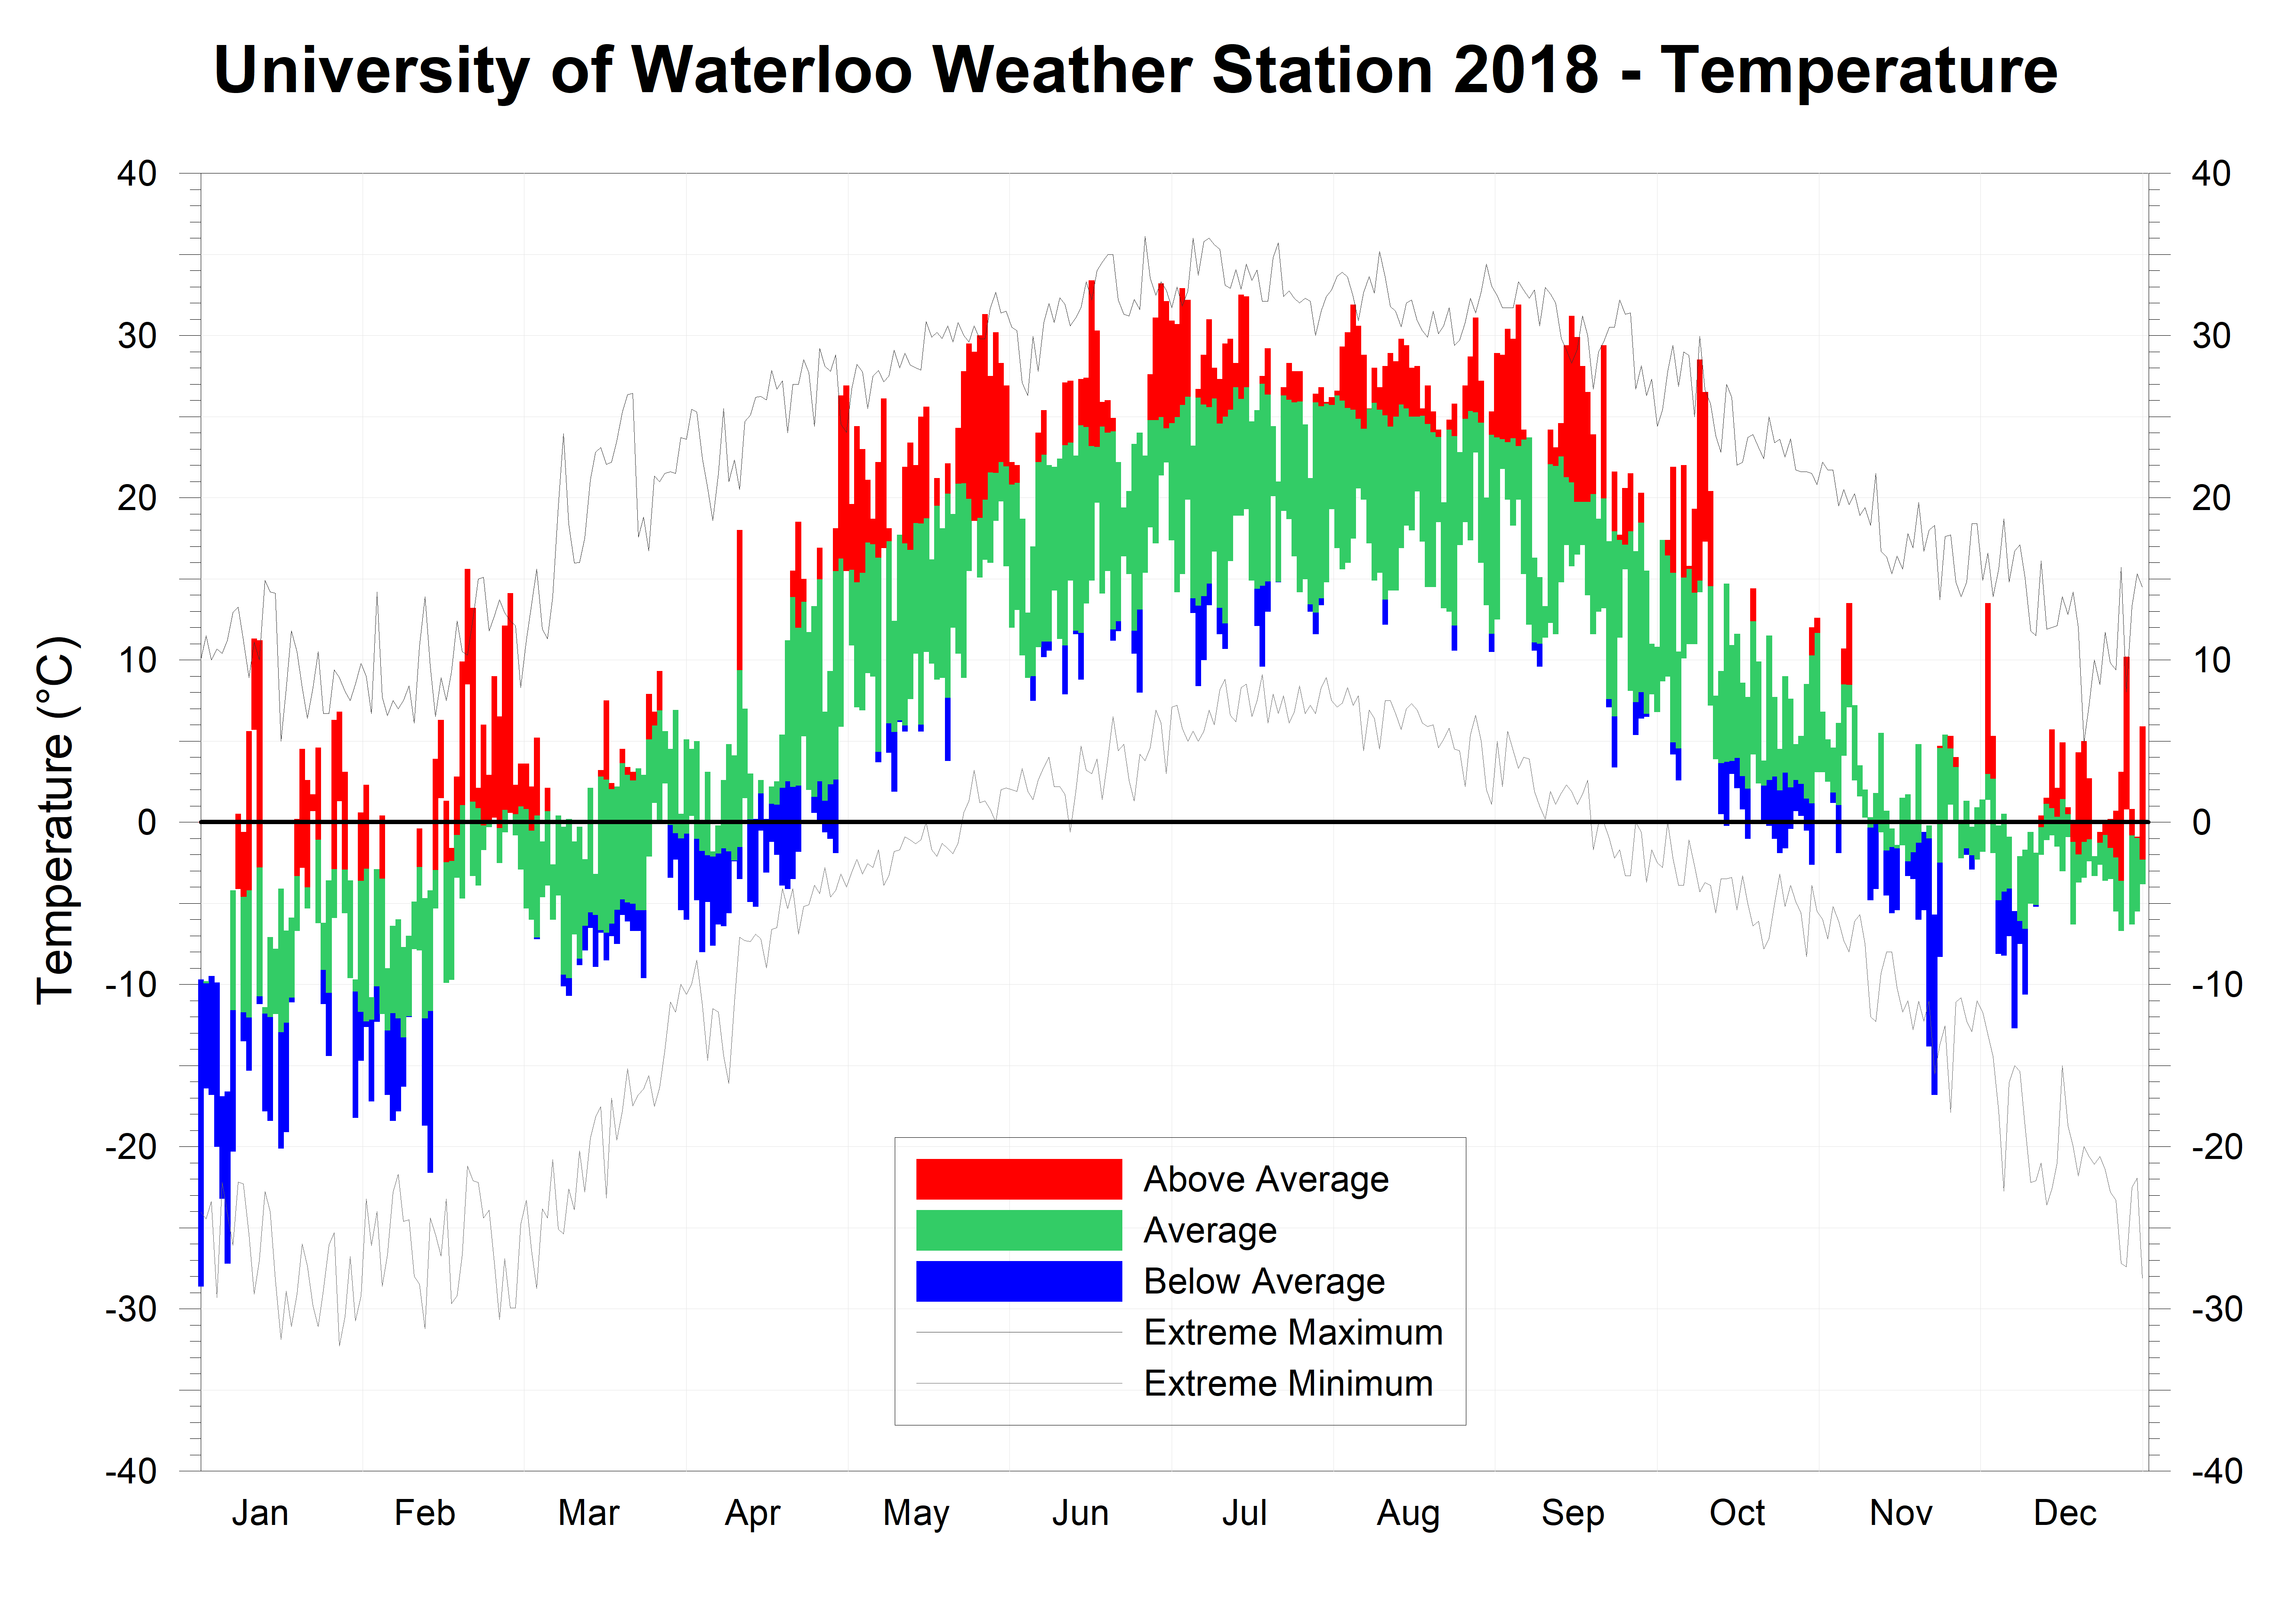 Canada Temperature Chart